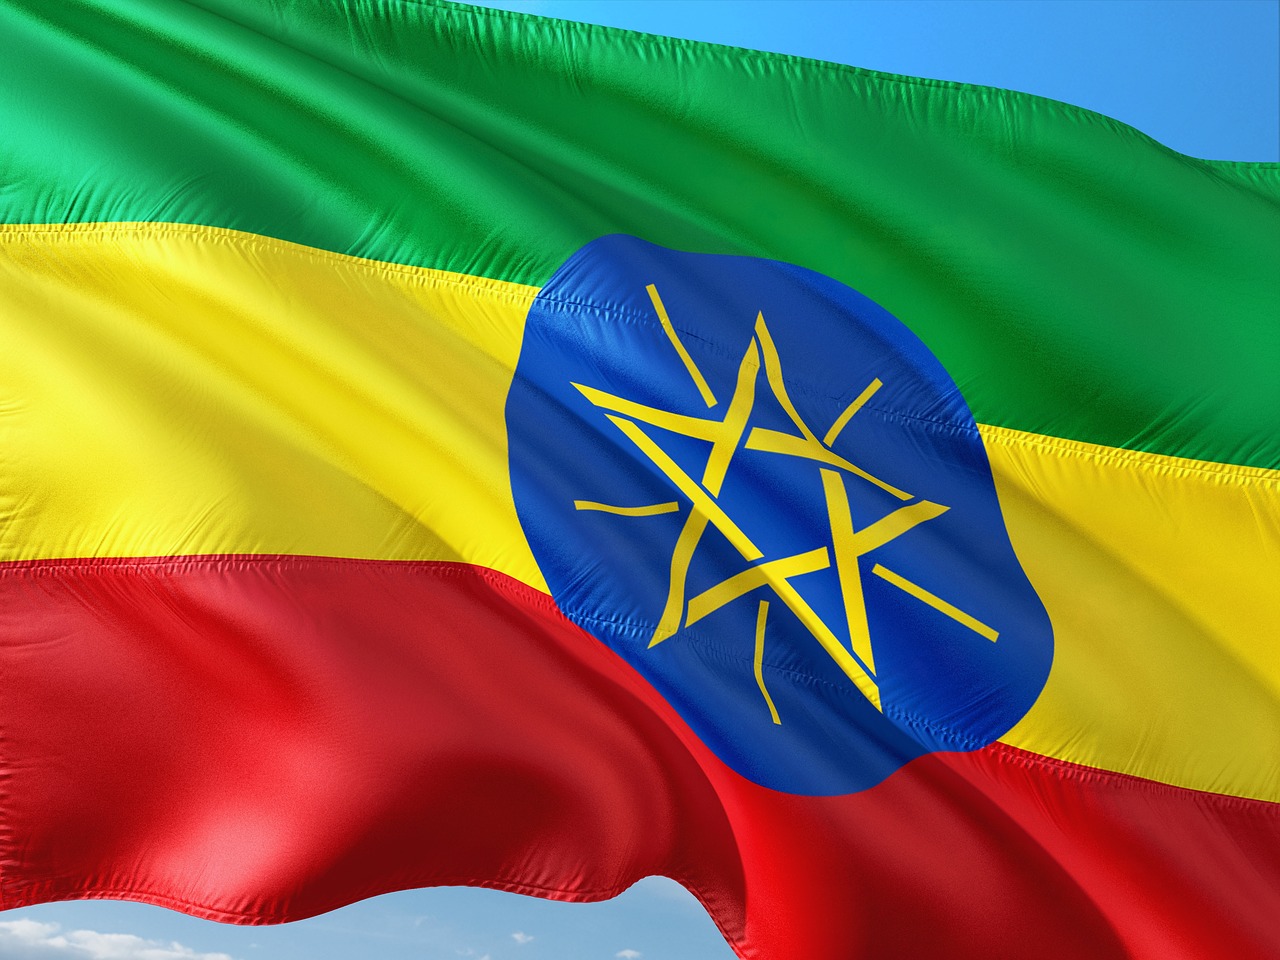 Ethiopia war enters ceasefire over humanitarian concerns